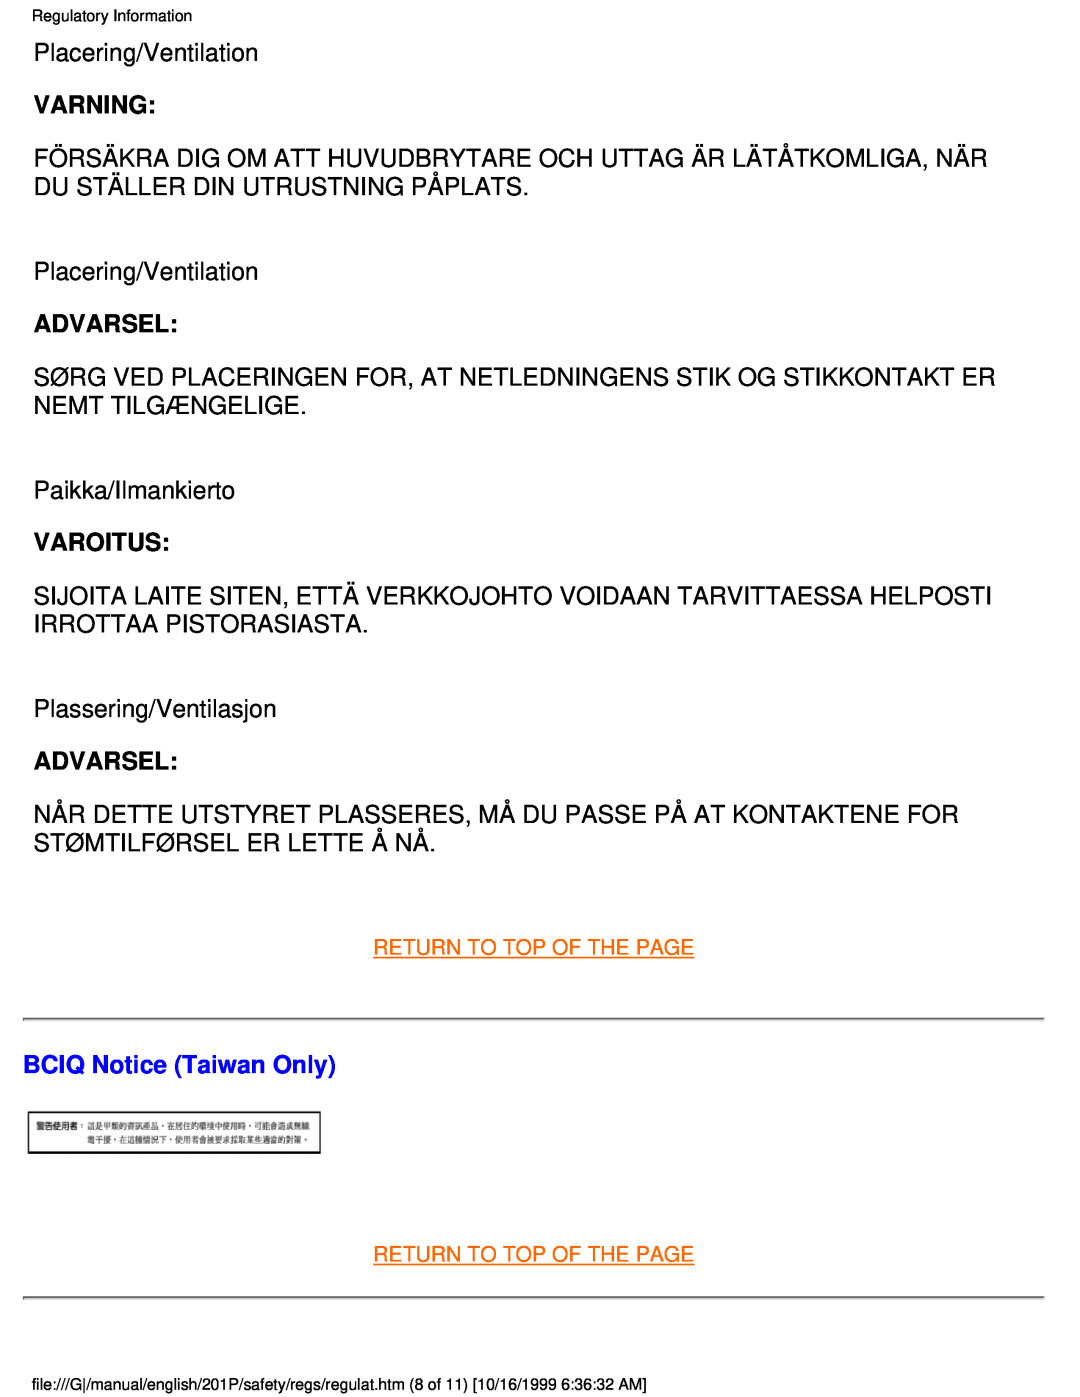 Philips 201P user manual Varning, Advarsel, Varoitus, BCIQ Notice Taiwan Only 